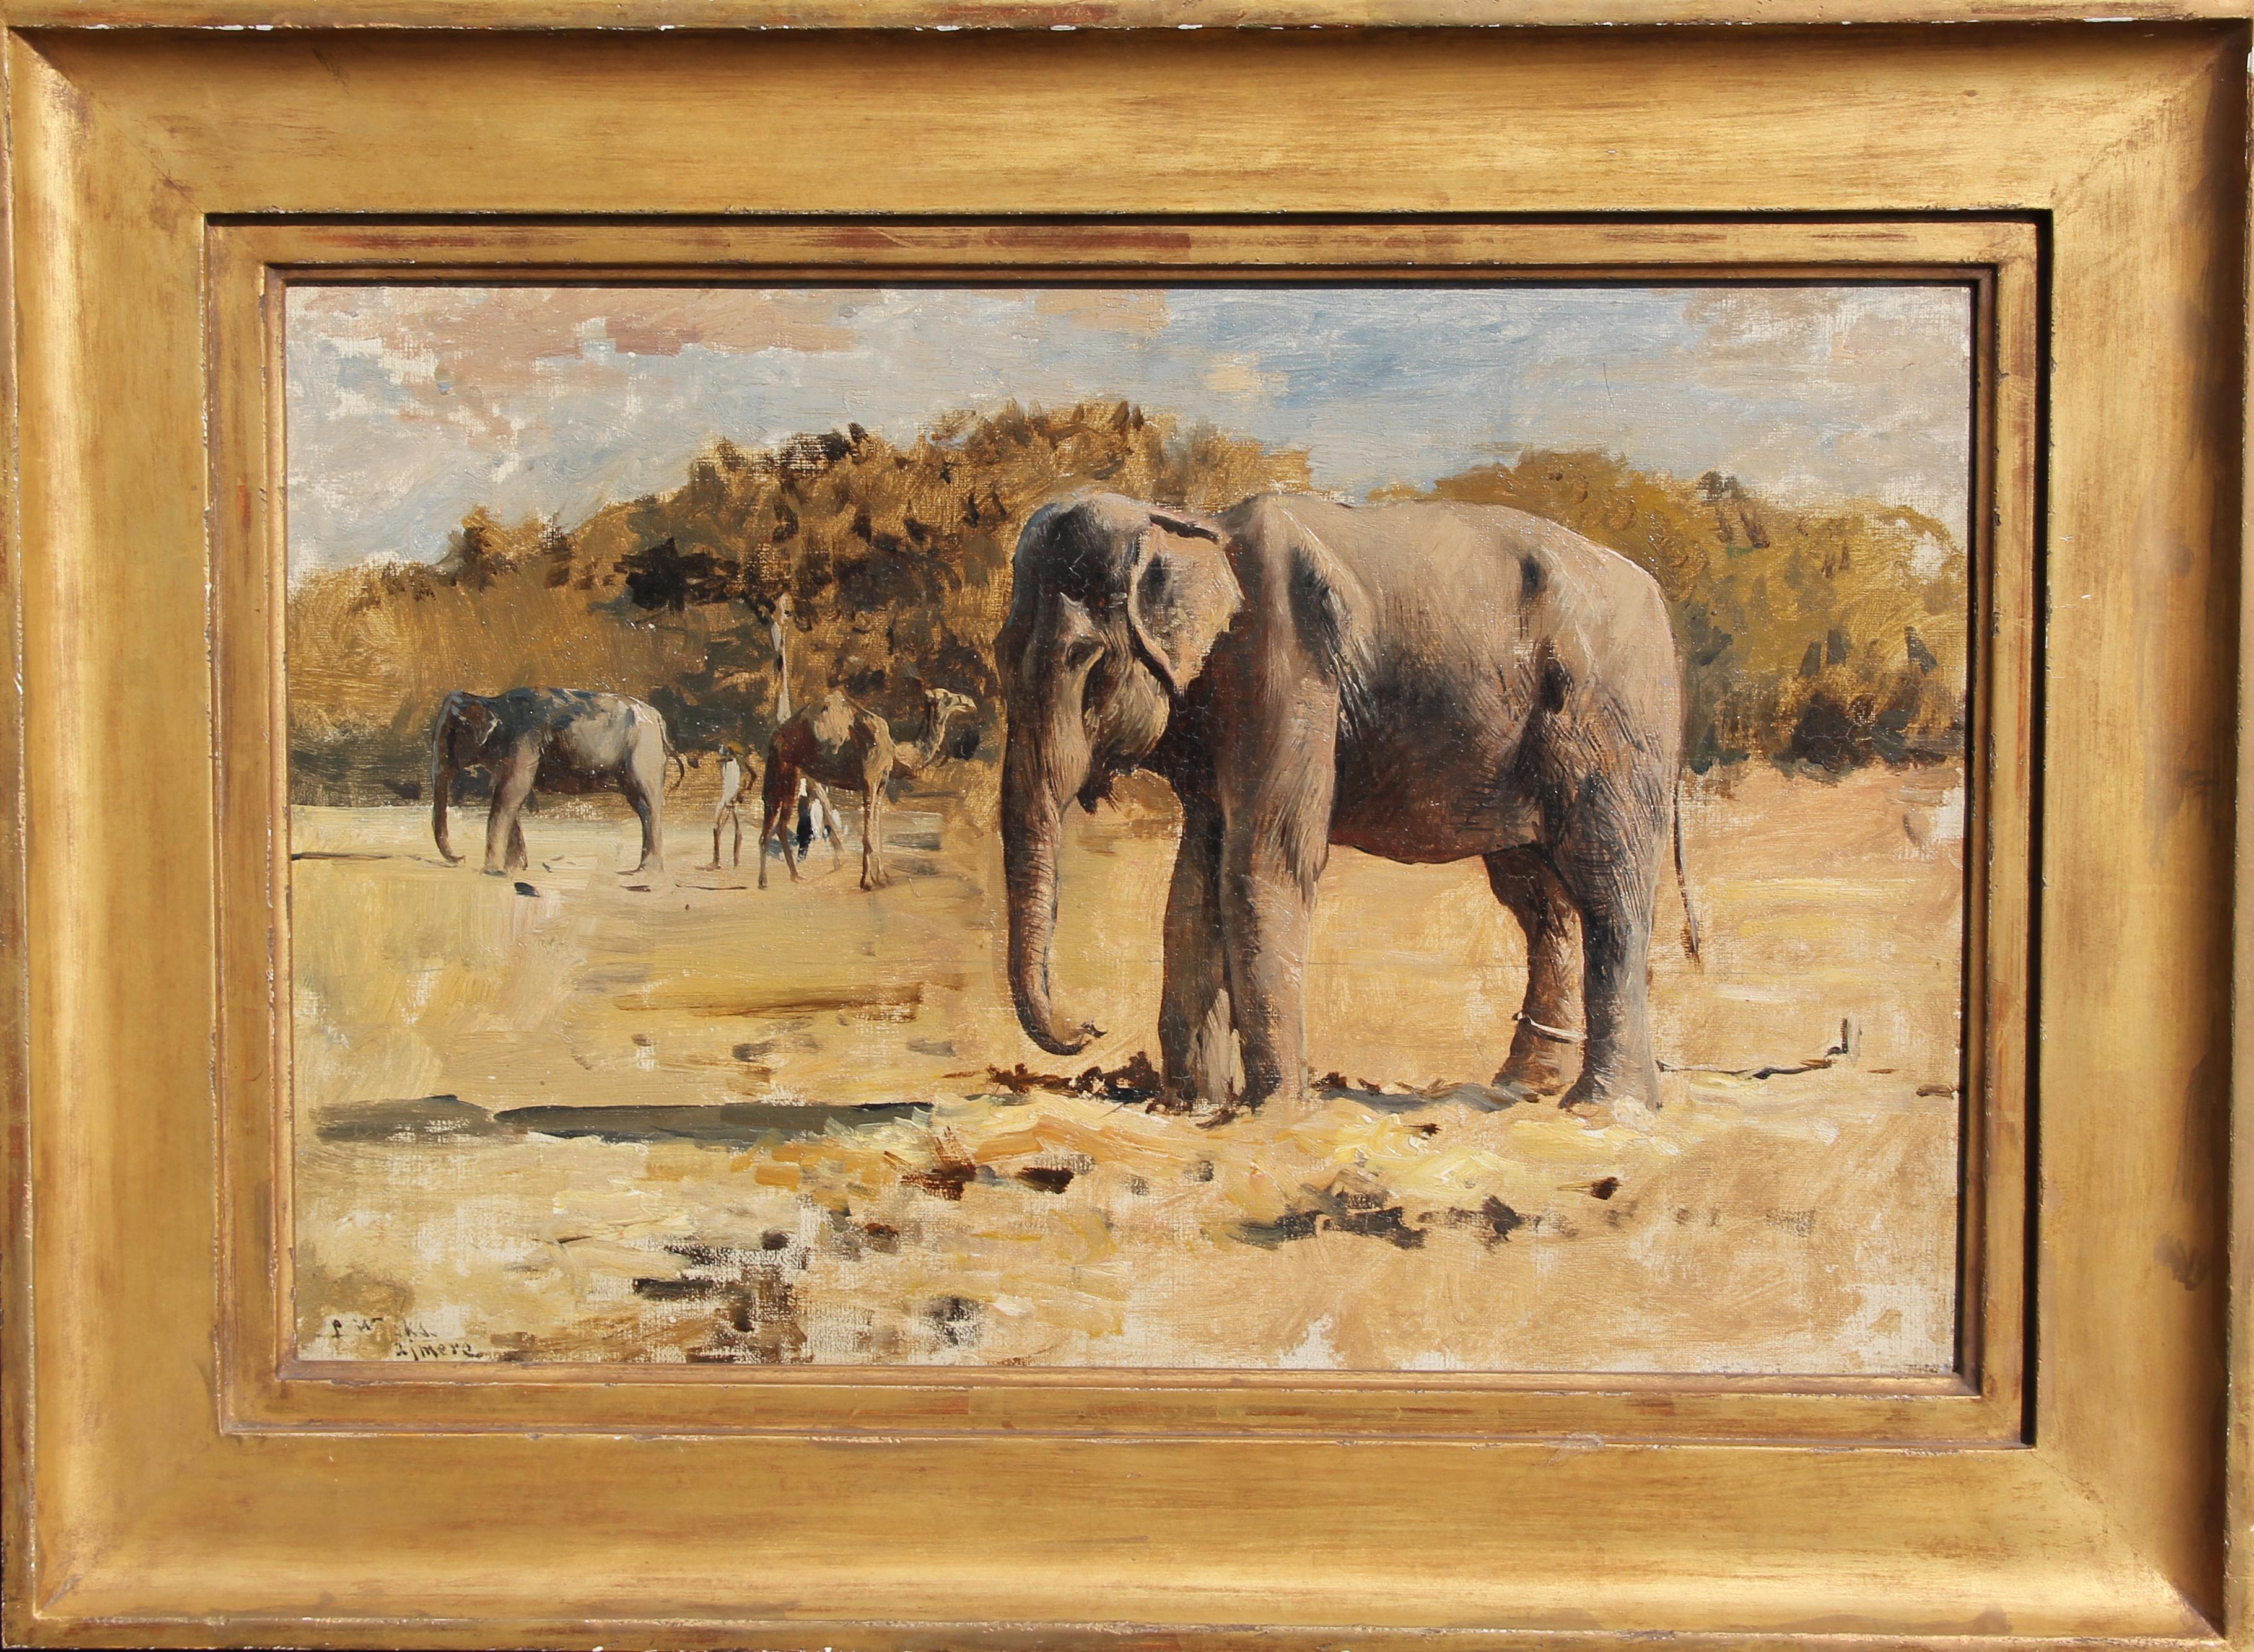 Elephants of Bekanir - Oil on Canvas - American - Painting by Edwin Lord Weeks